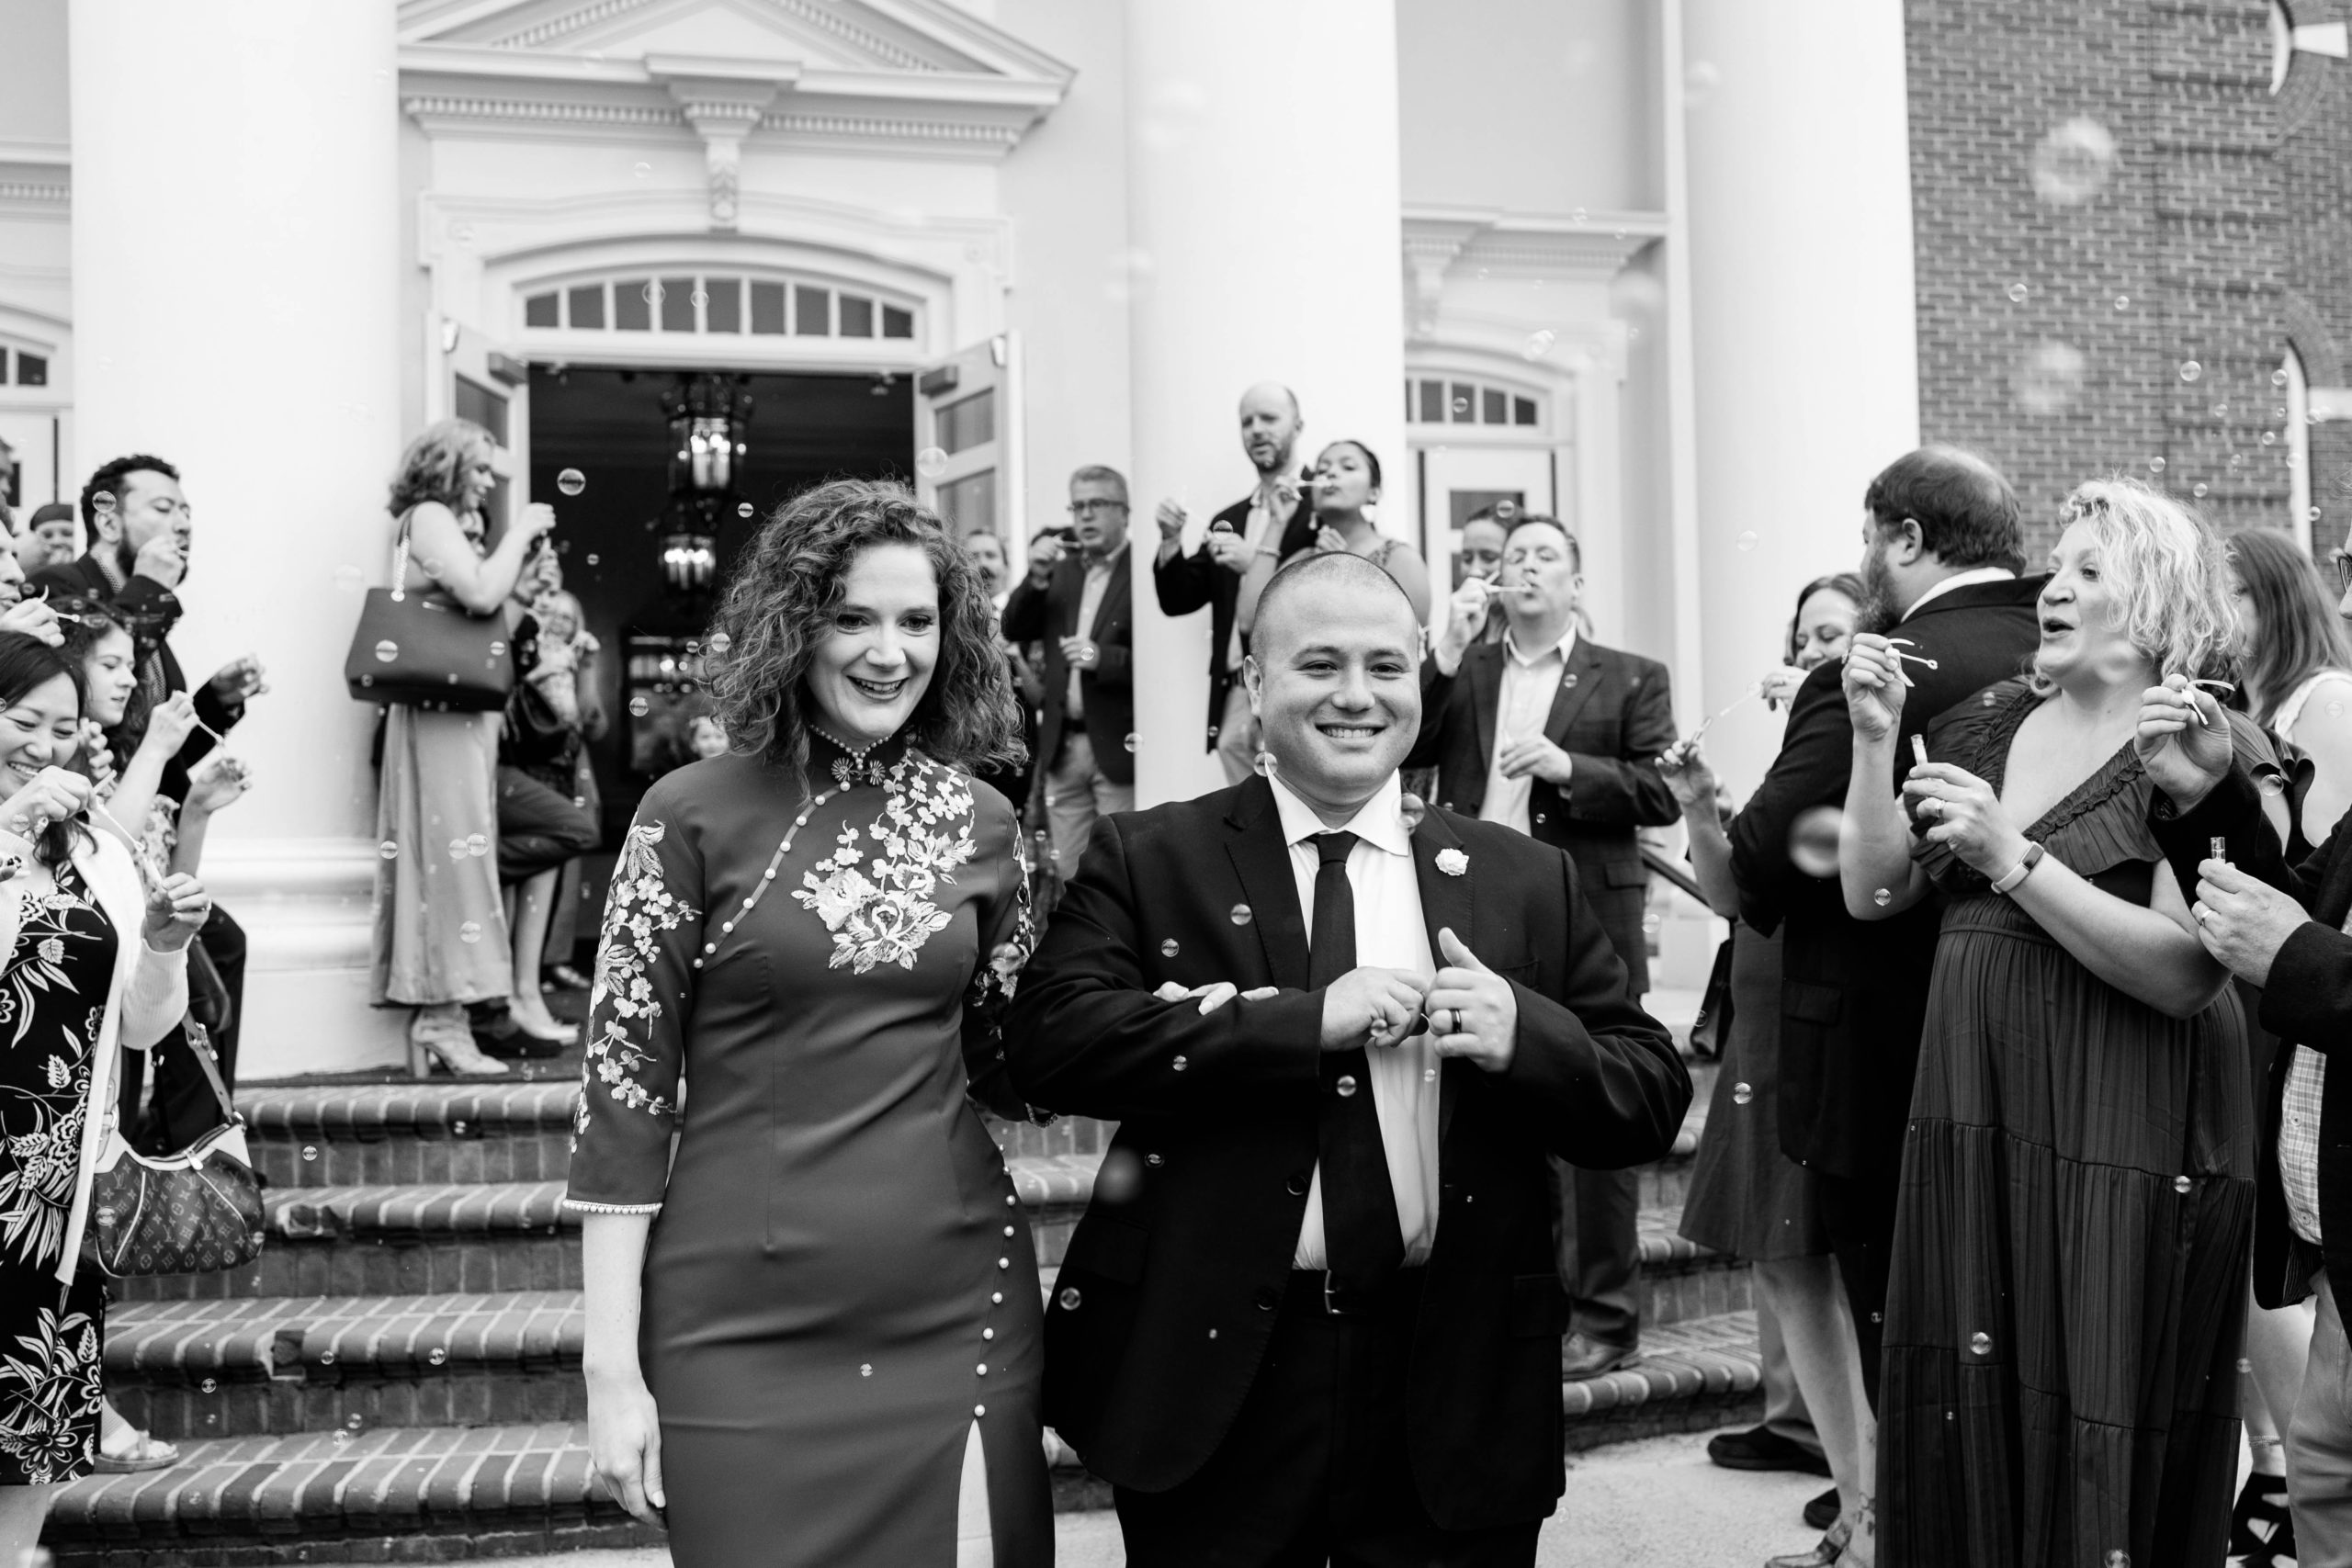 Eleanor Stenner Photography - a Birmingham, Alabama Wedding Photographer - shares the best honeymoon locations for newlyweds